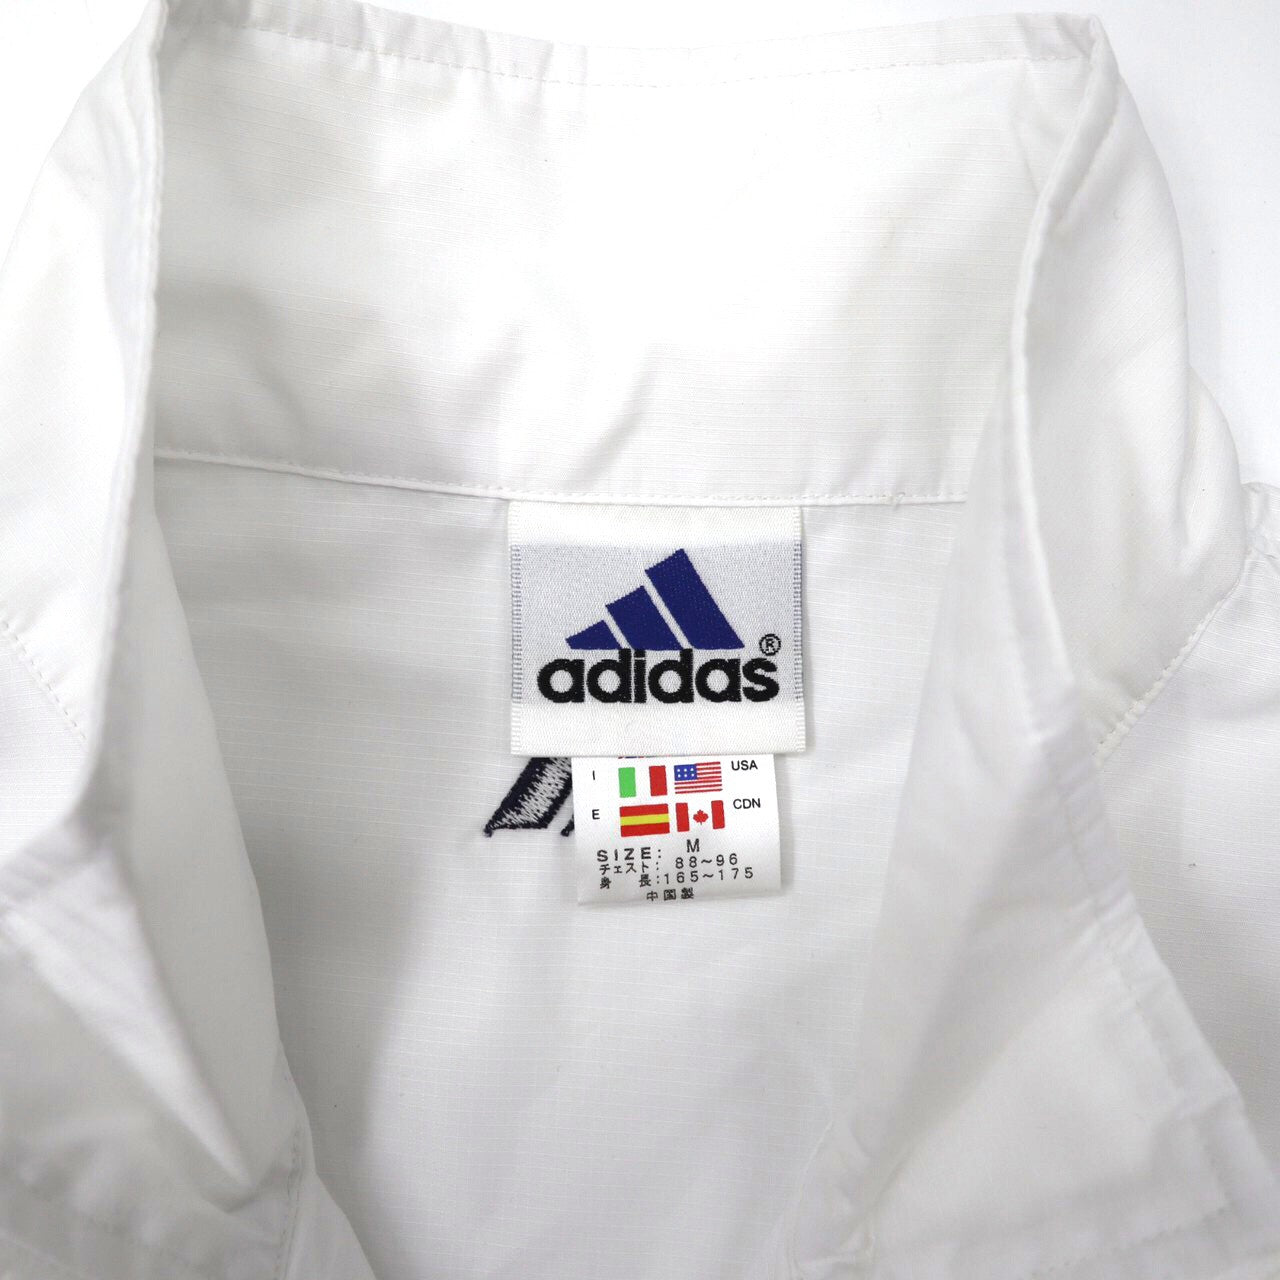 Adidas Track Jacket Setup Jersey M White Polyester Logo Embroidery